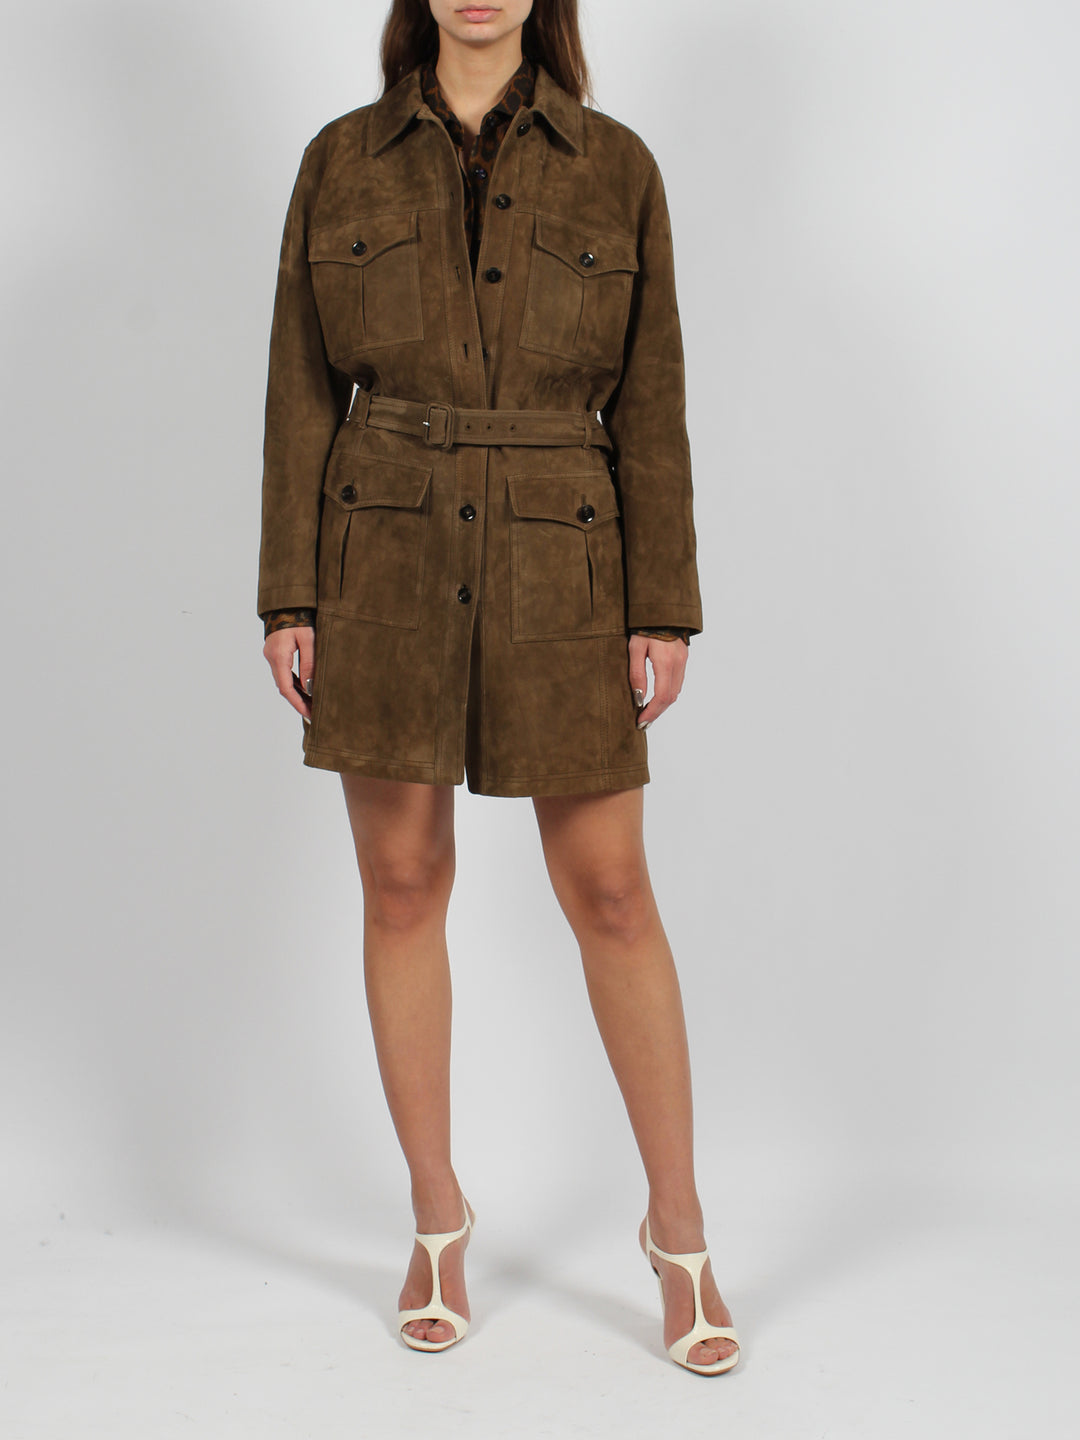 Lightweight soft suede safari coat